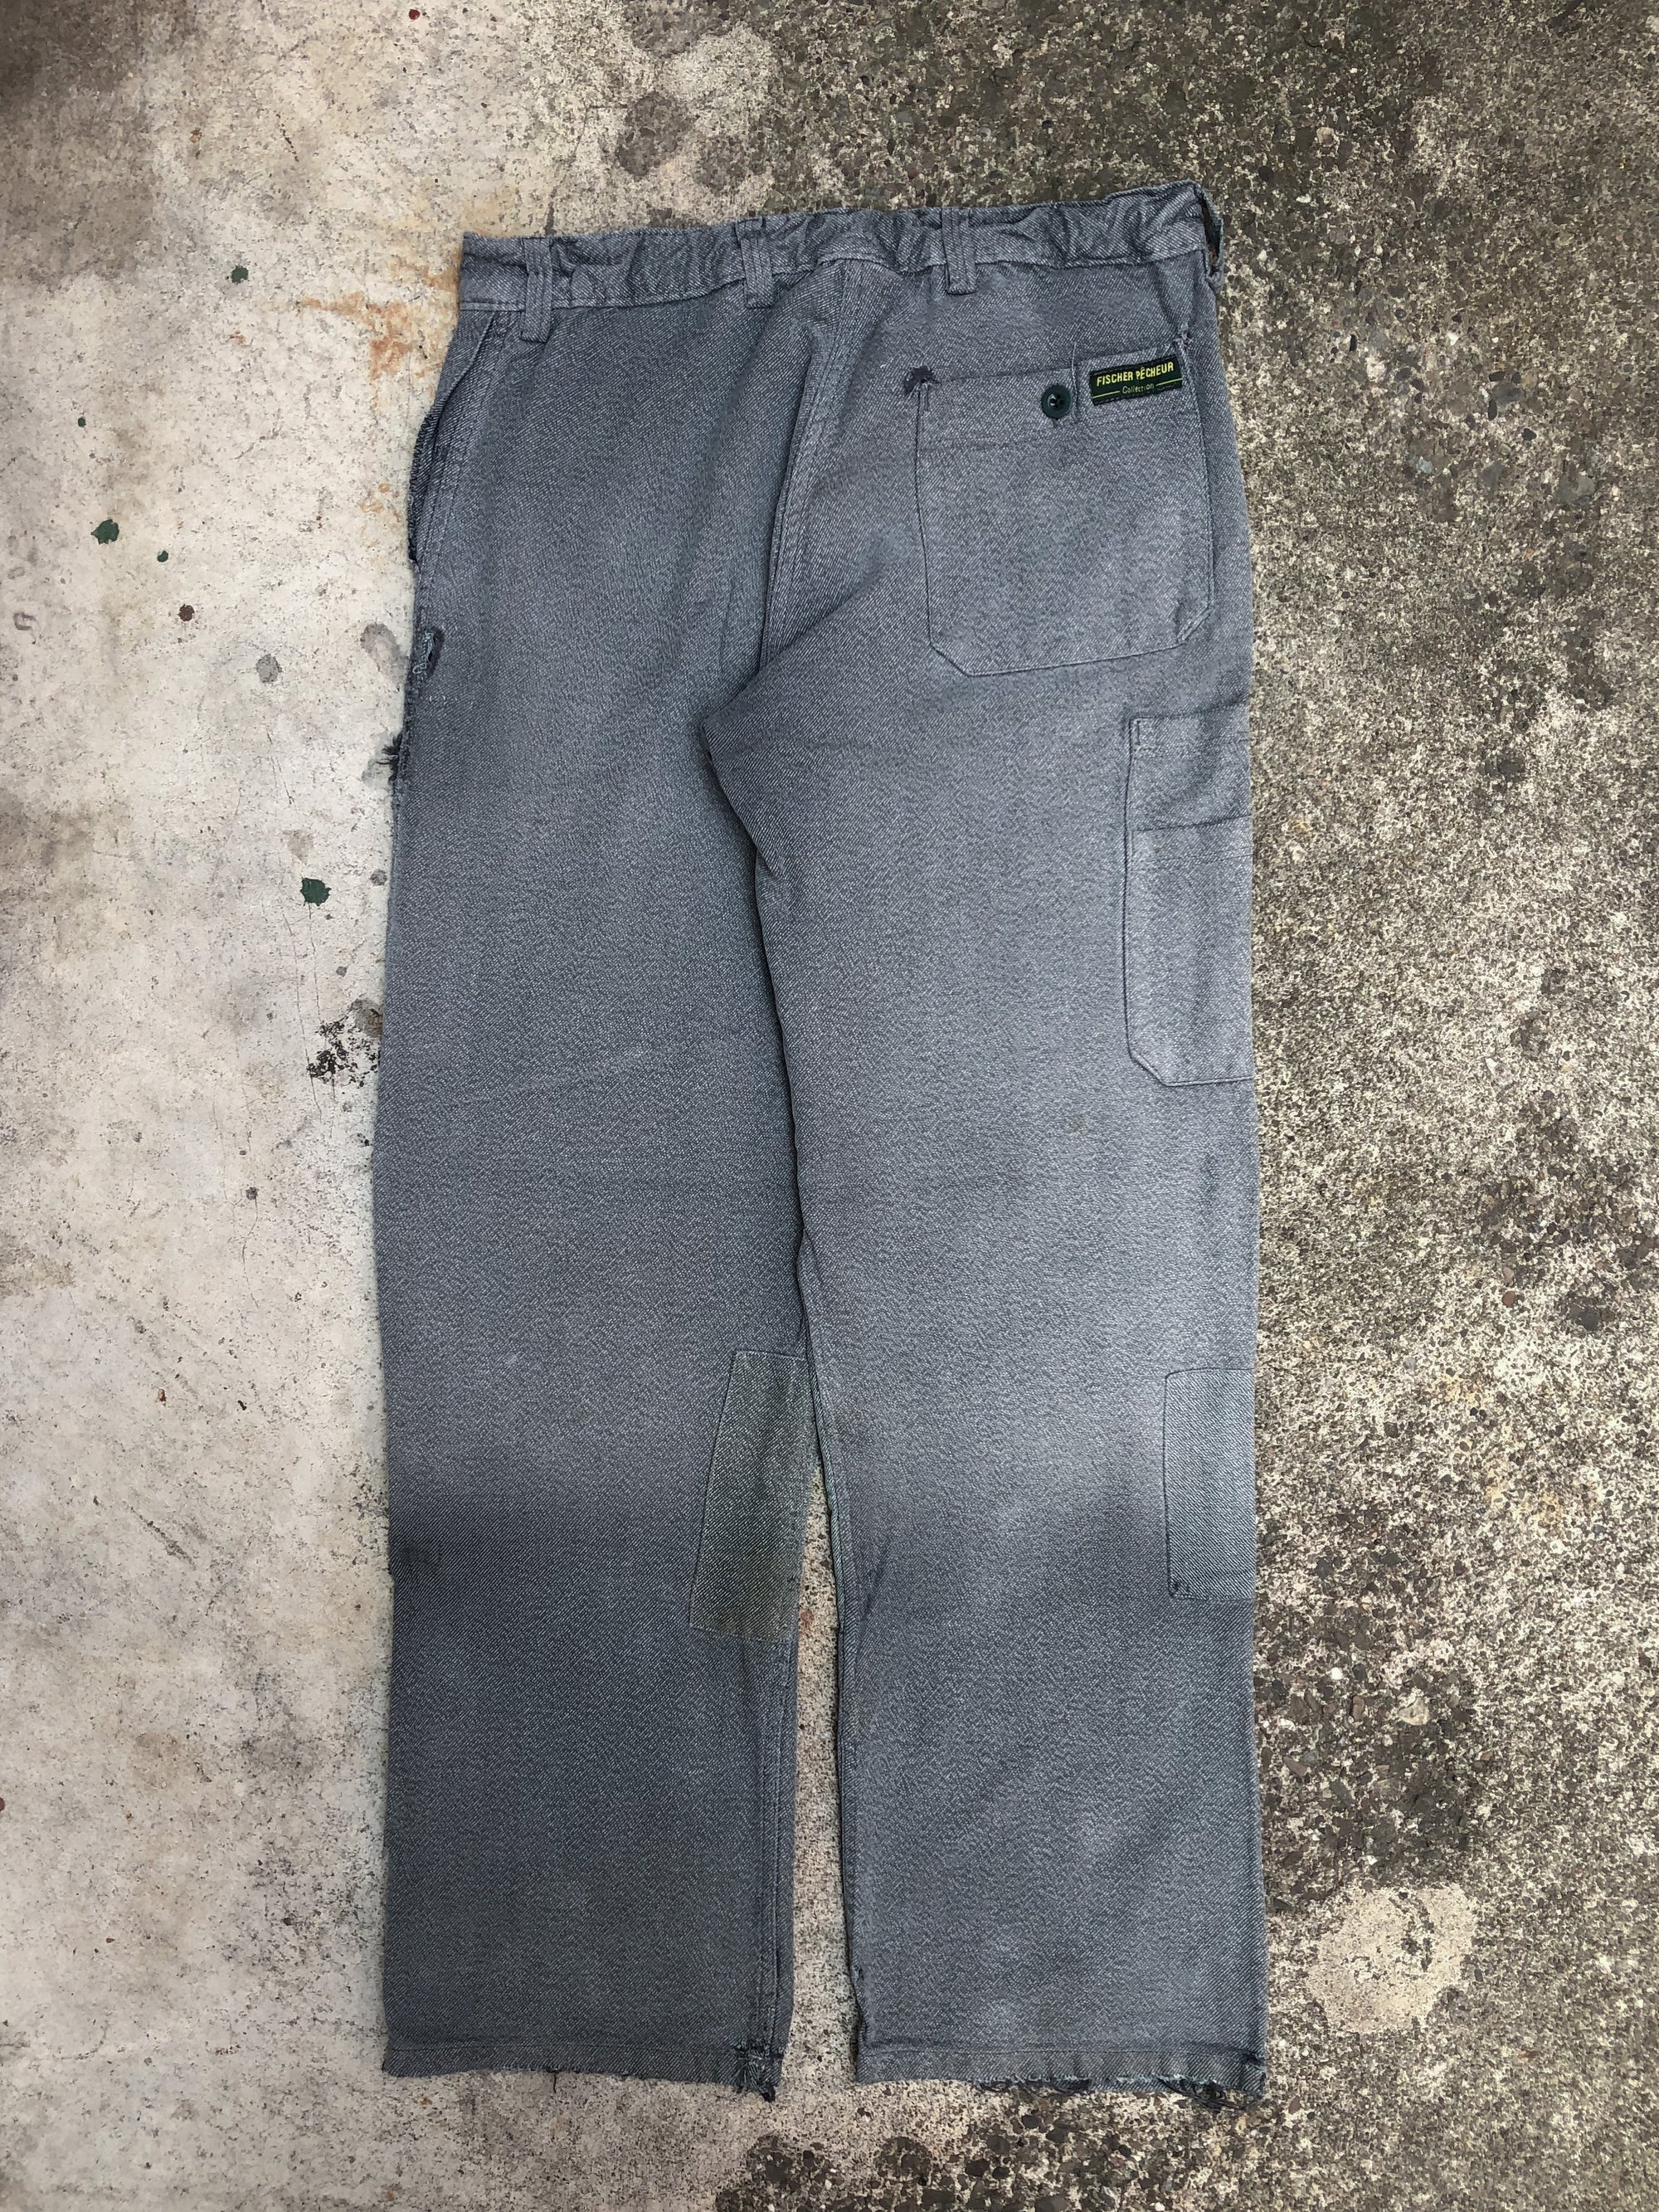 1950s Grey Green Repaired Patchwork European Work Pants (33X30)